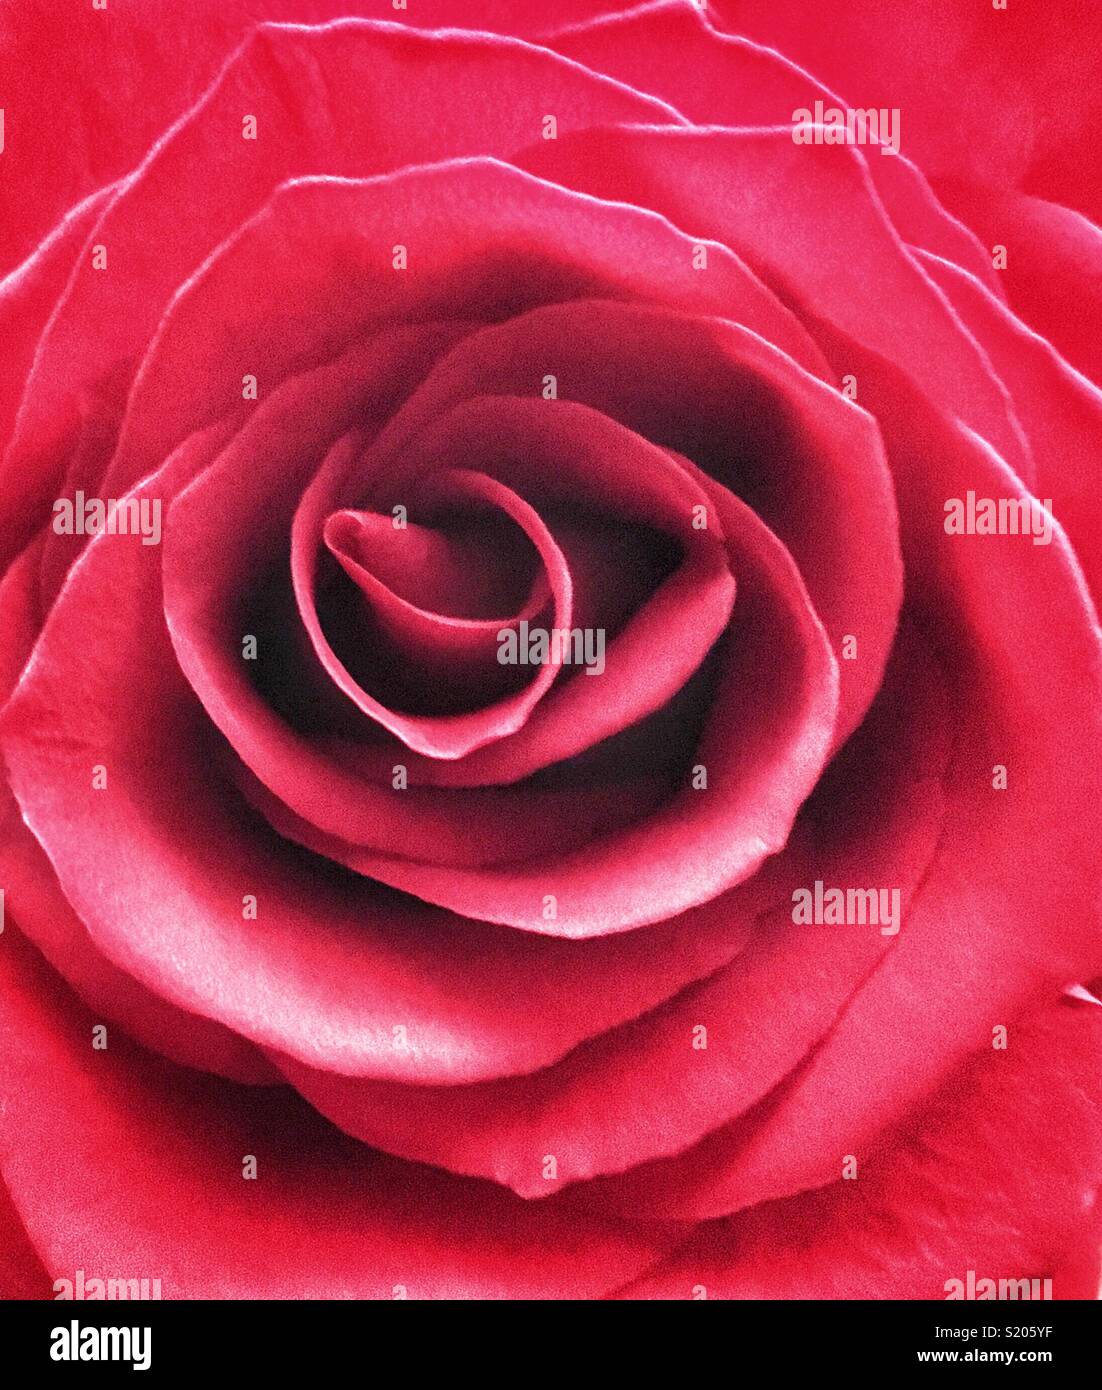 Centro de red rose bloom Foto de stock